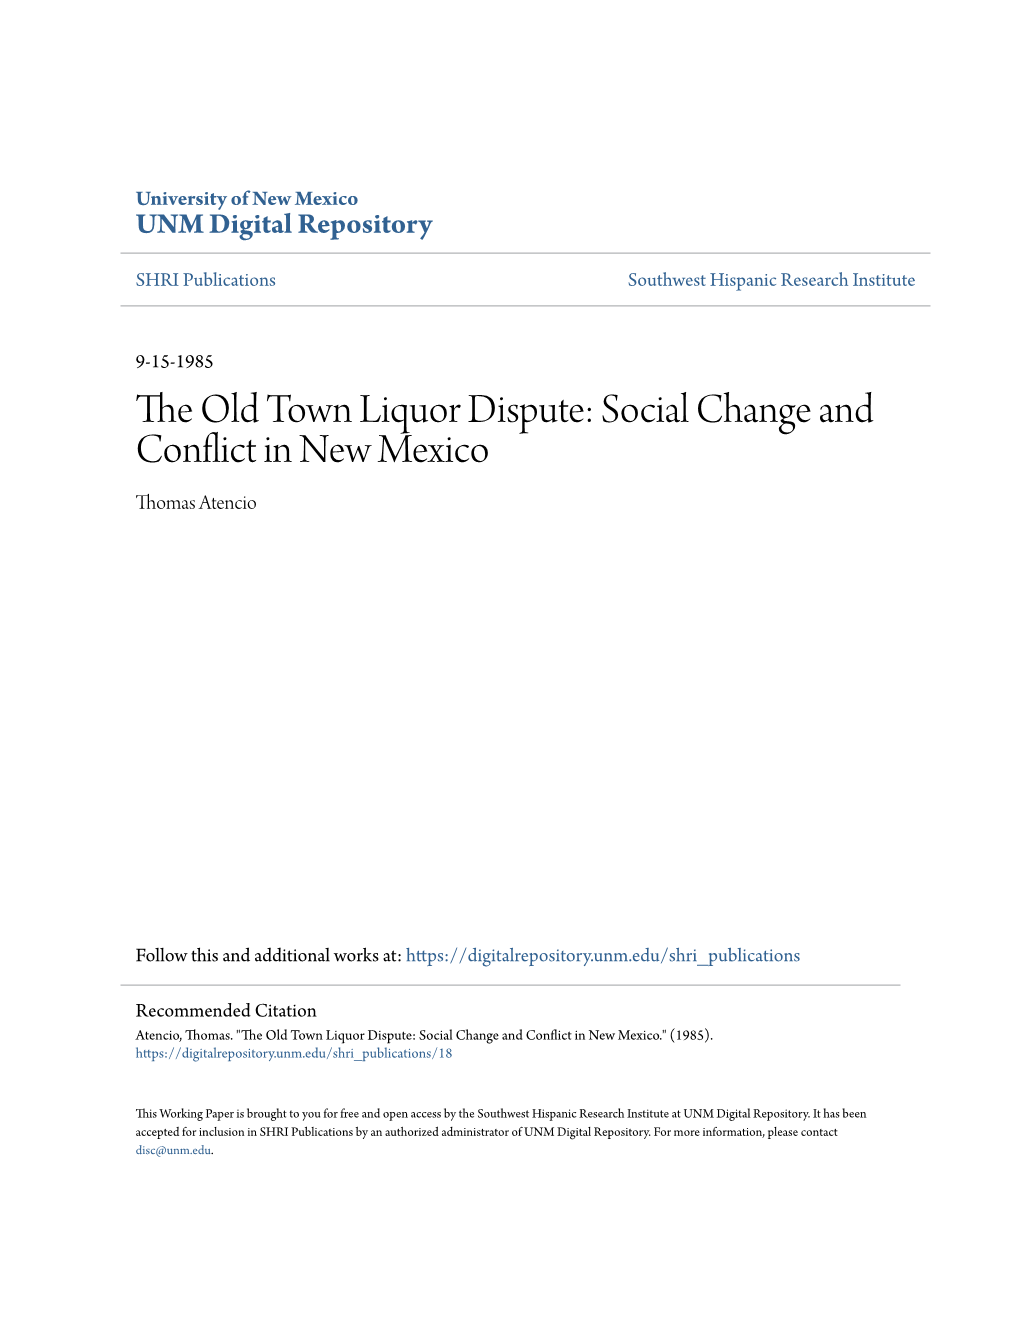 Social Change and Conflict in New Mexico Thomas Atencio